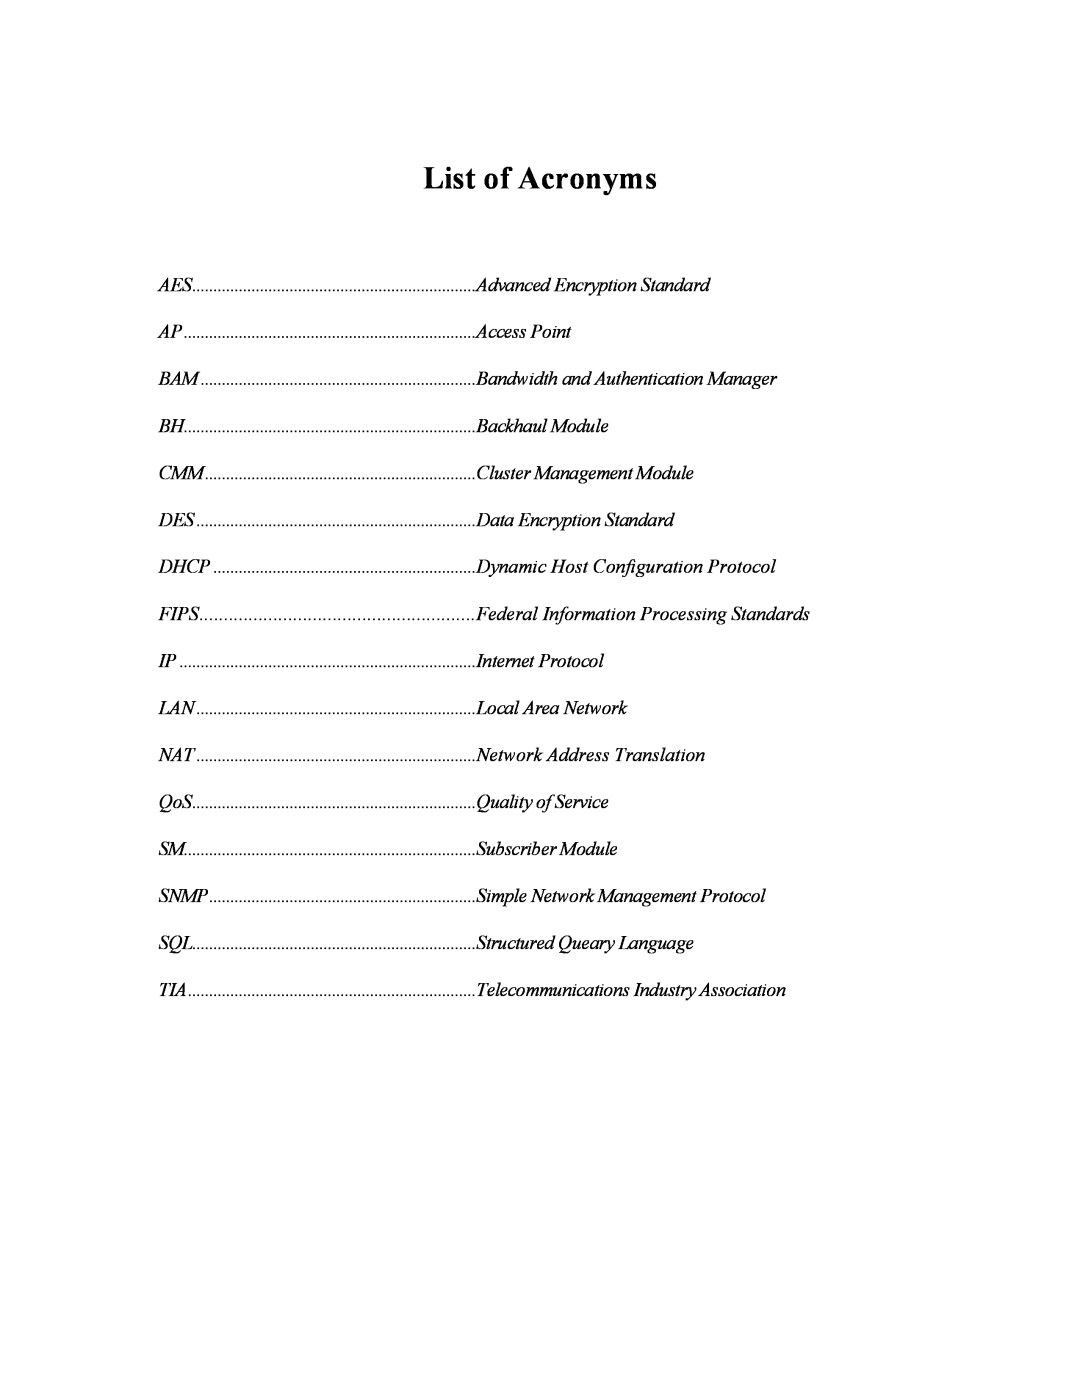 Motorola Wireless Broadband Platform manual List of Acronyms 